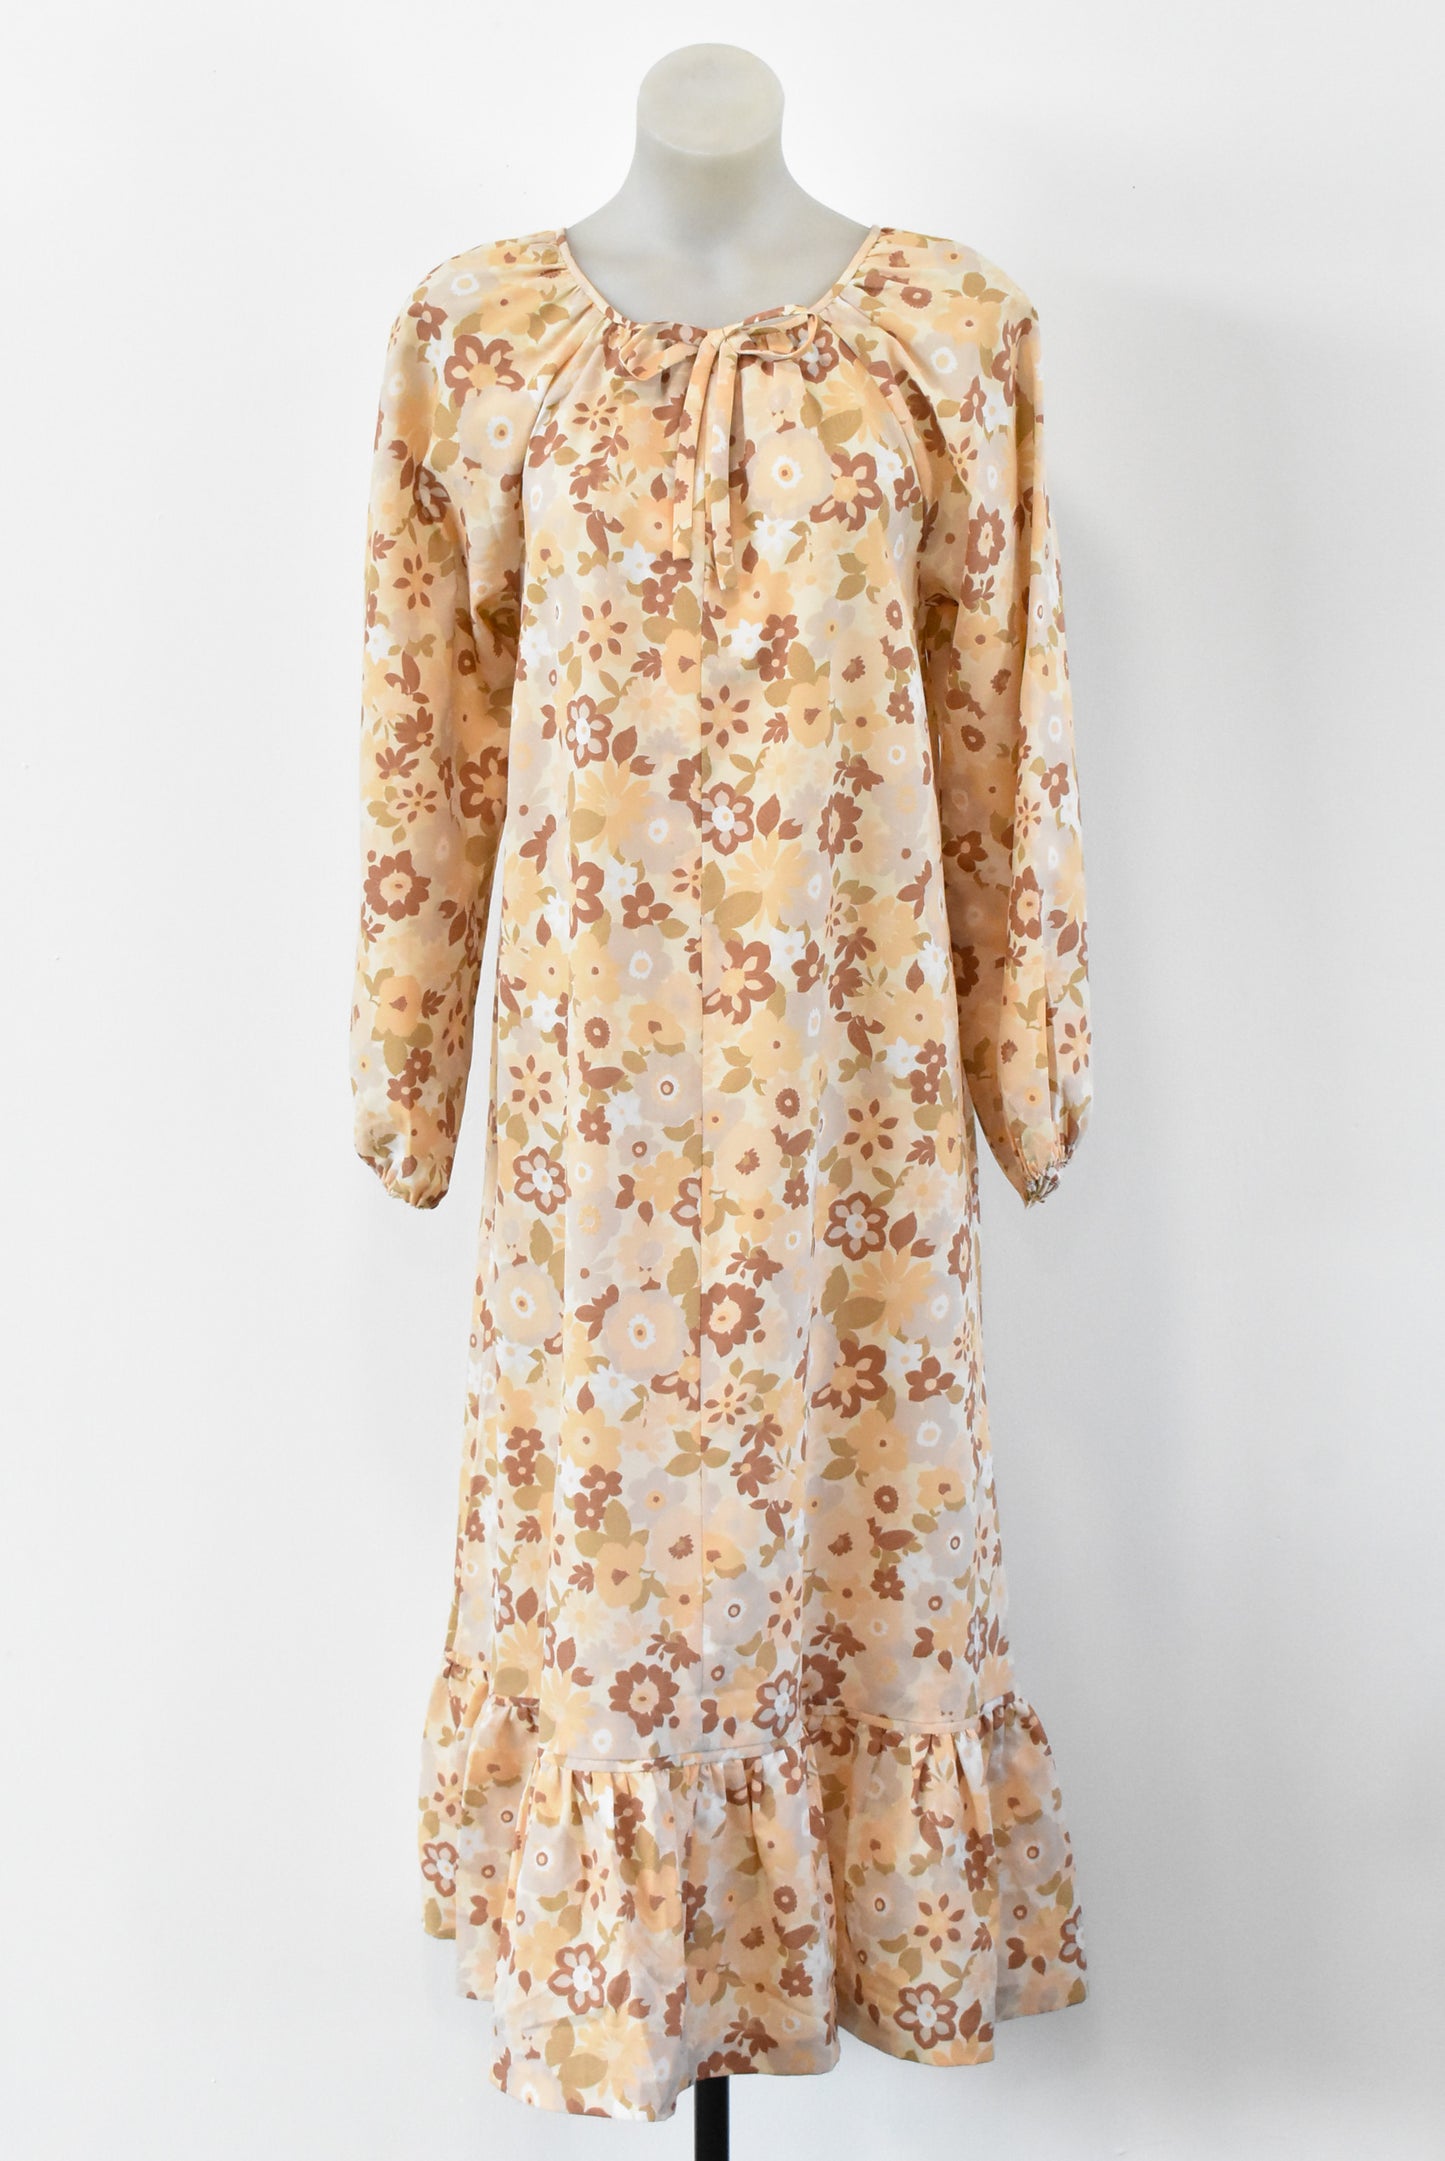 Retro handmade floral dress, L